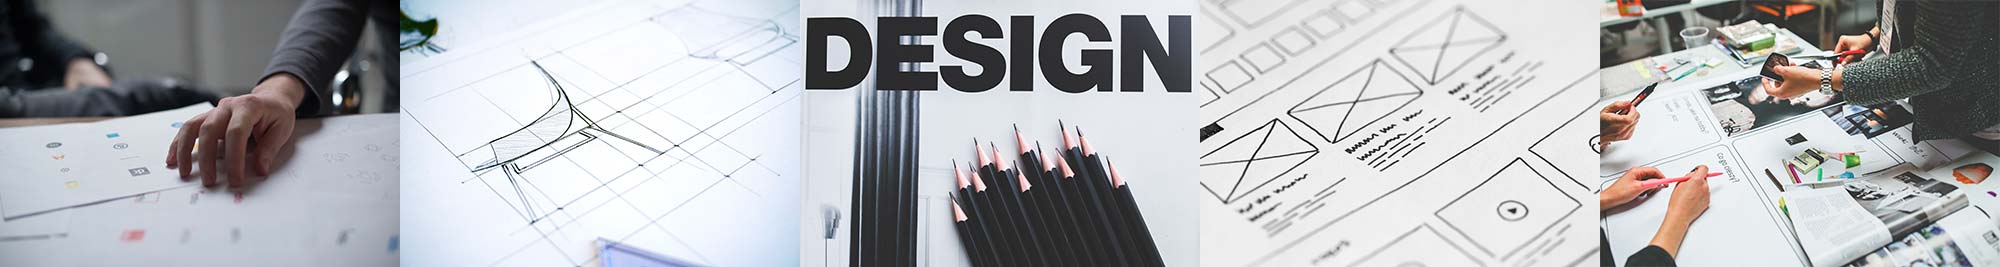 Corporate Design - Gestaltung individuelles Logo